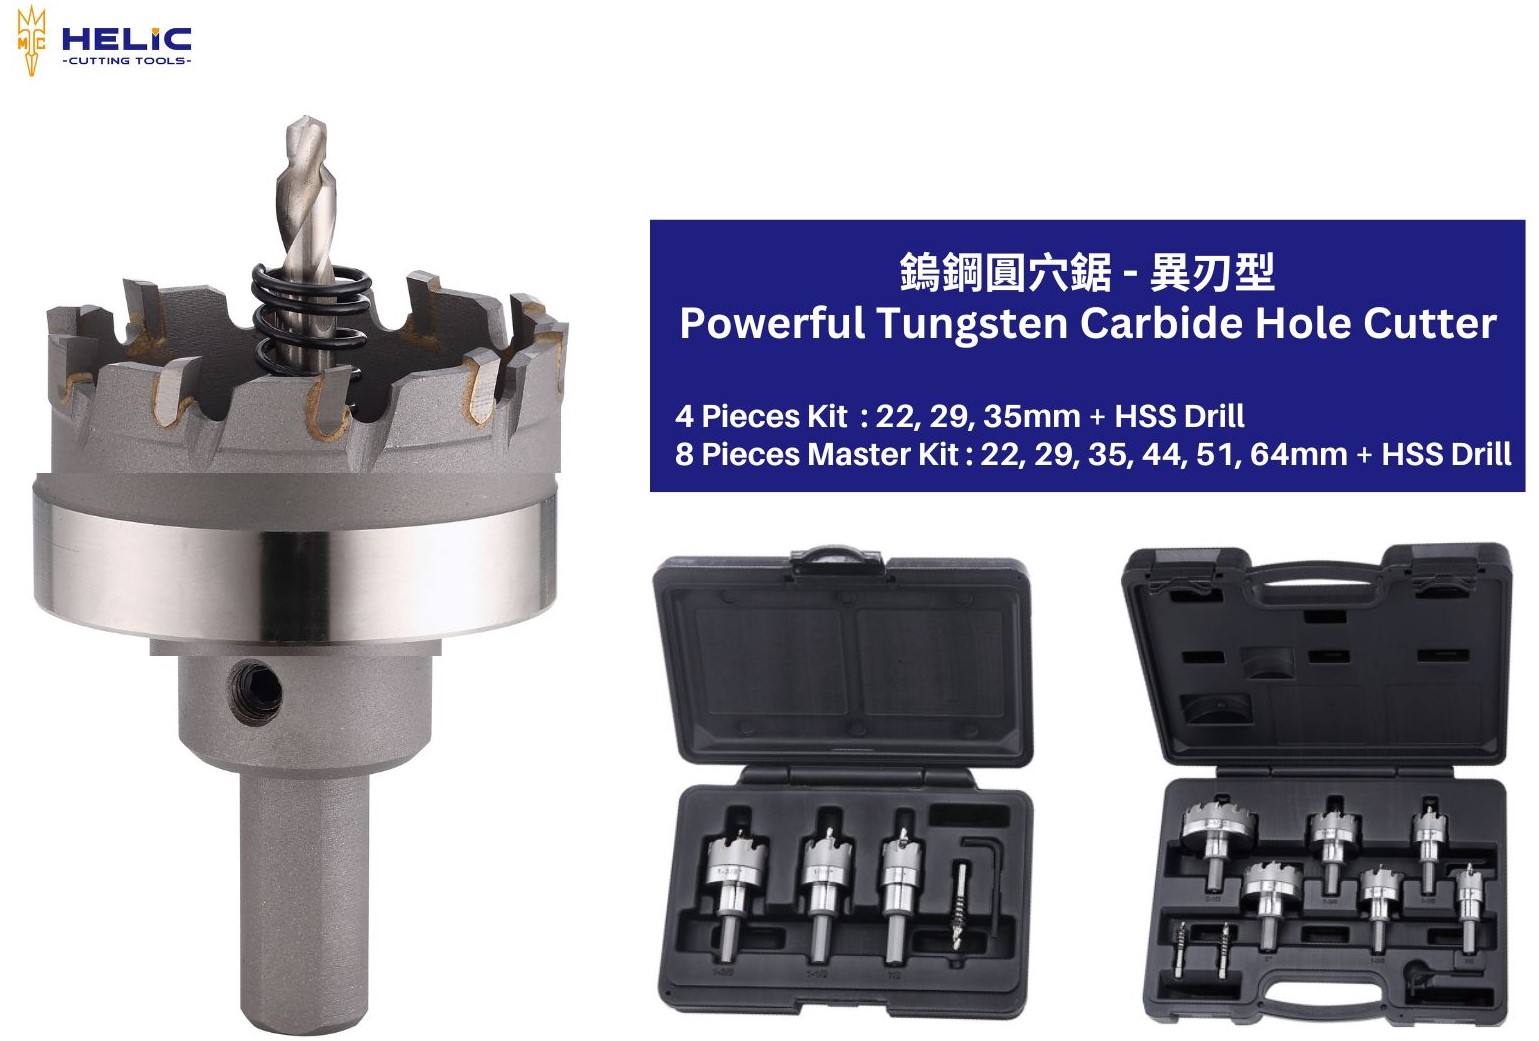 Powerful Tungsten Carbide Hole Cutter